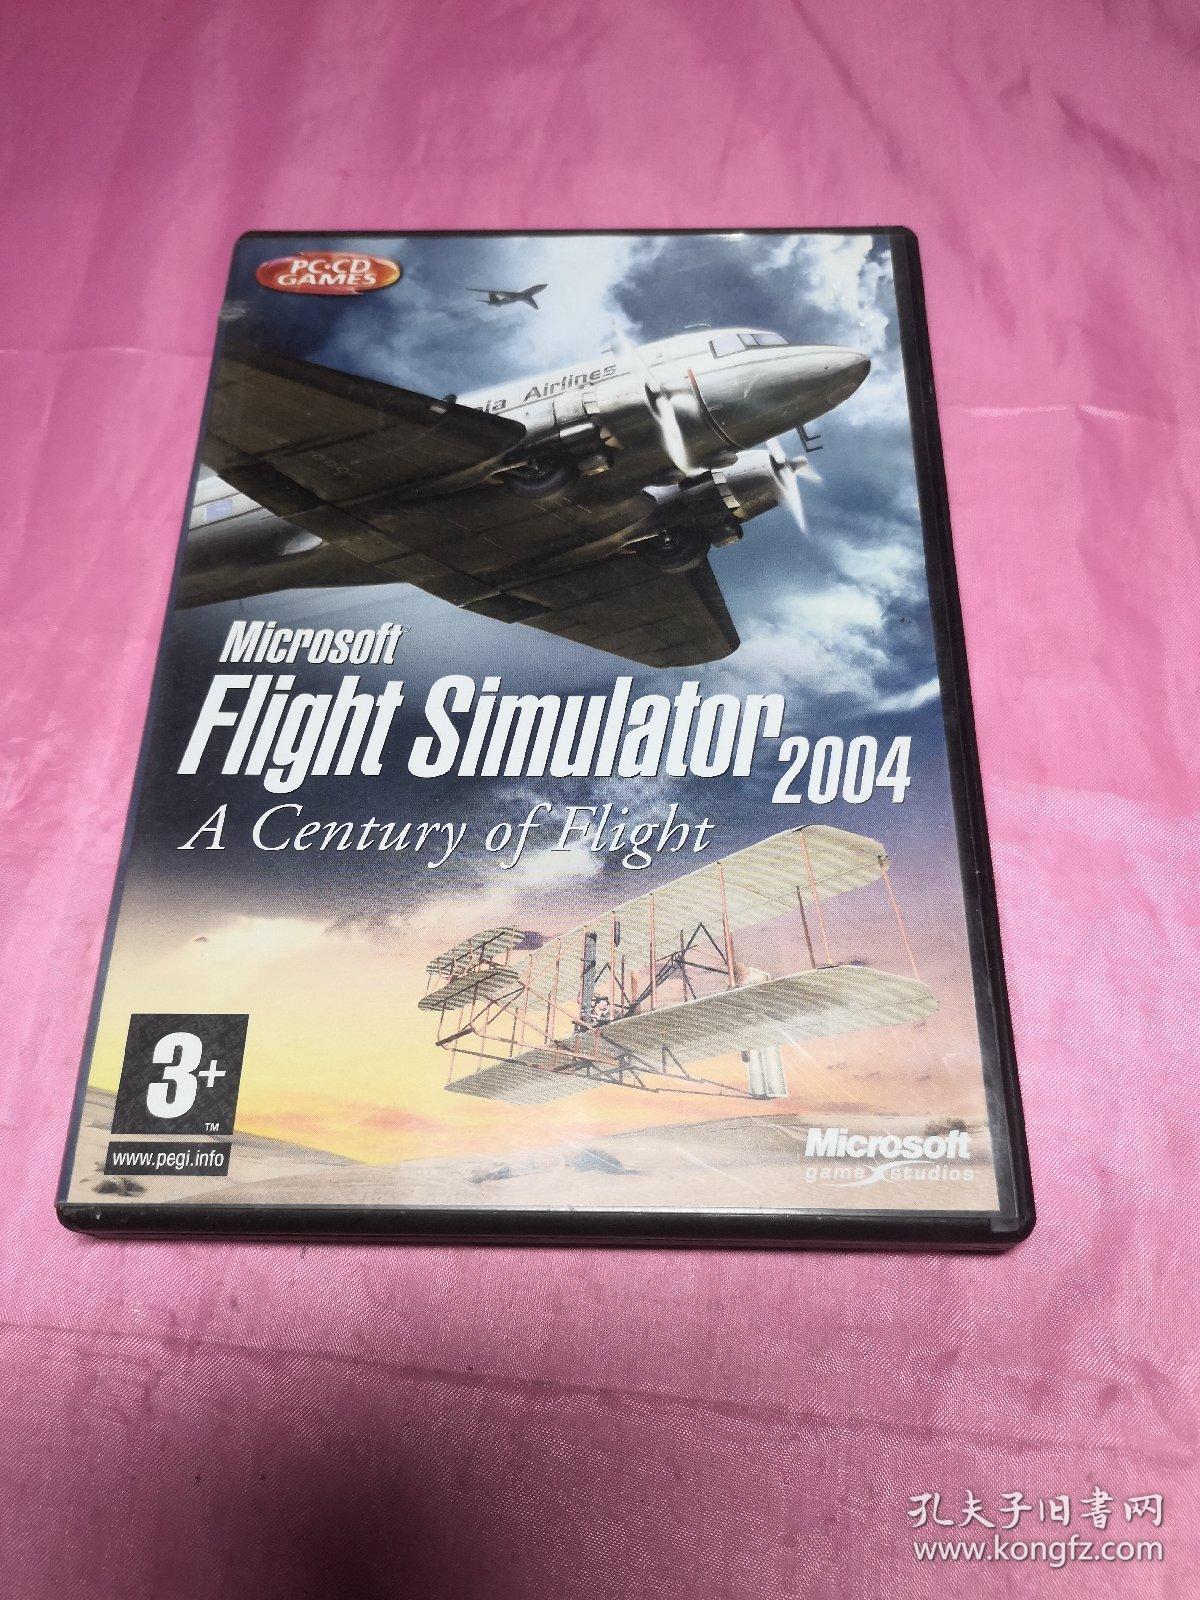 PC·CD GAMES：Microsoft Flight Simulator2004
A Century of Flight(4张CD+游戏说明书)3+TM